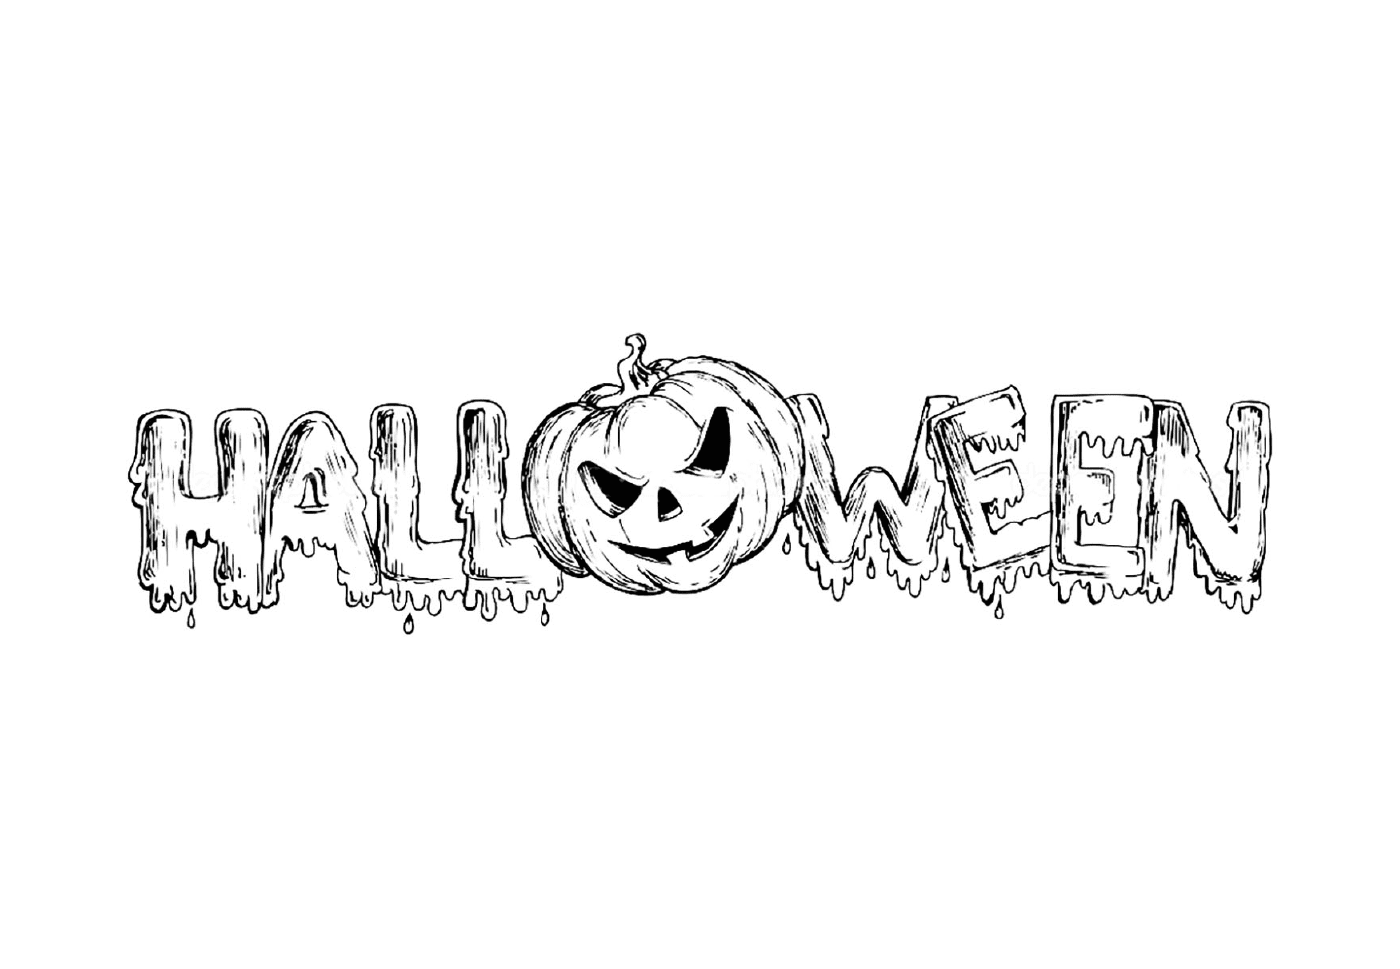  Zucca e la parola Halloween 